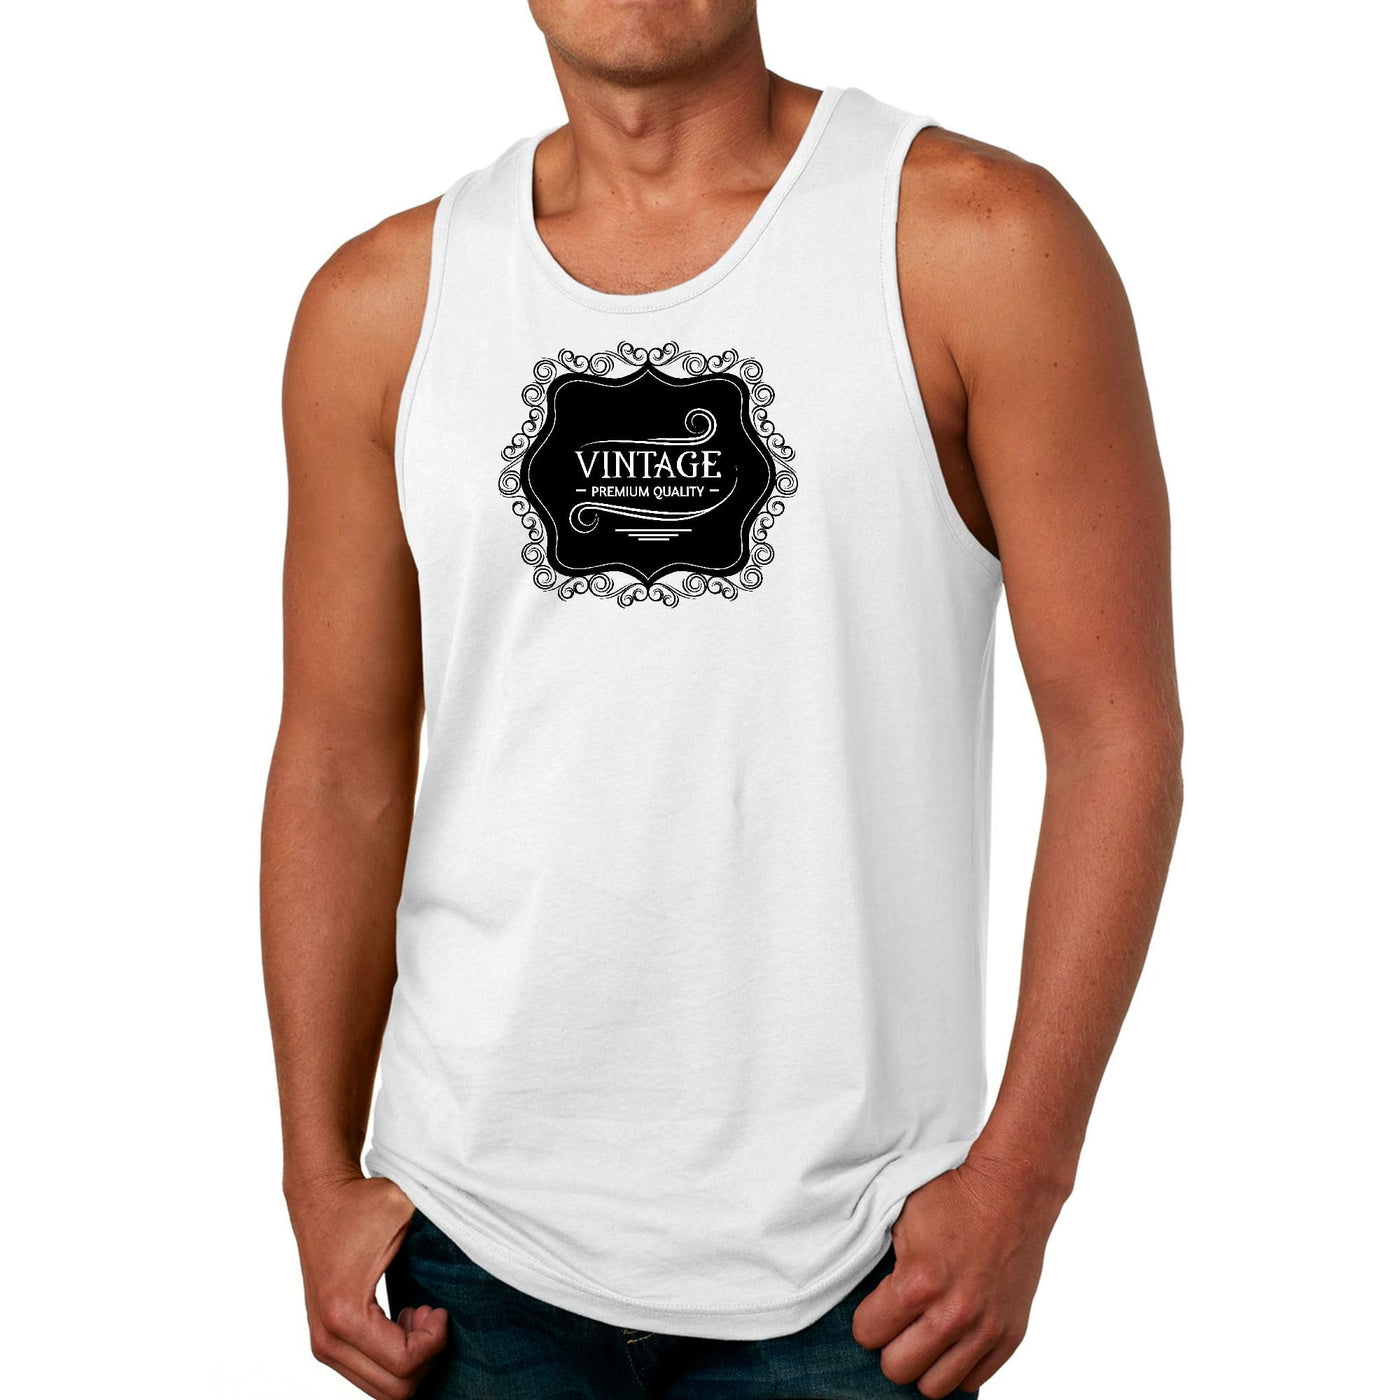 Mens Fitness Tank Top Graphic T-shirt Vintage Premium Quality Black - Mens